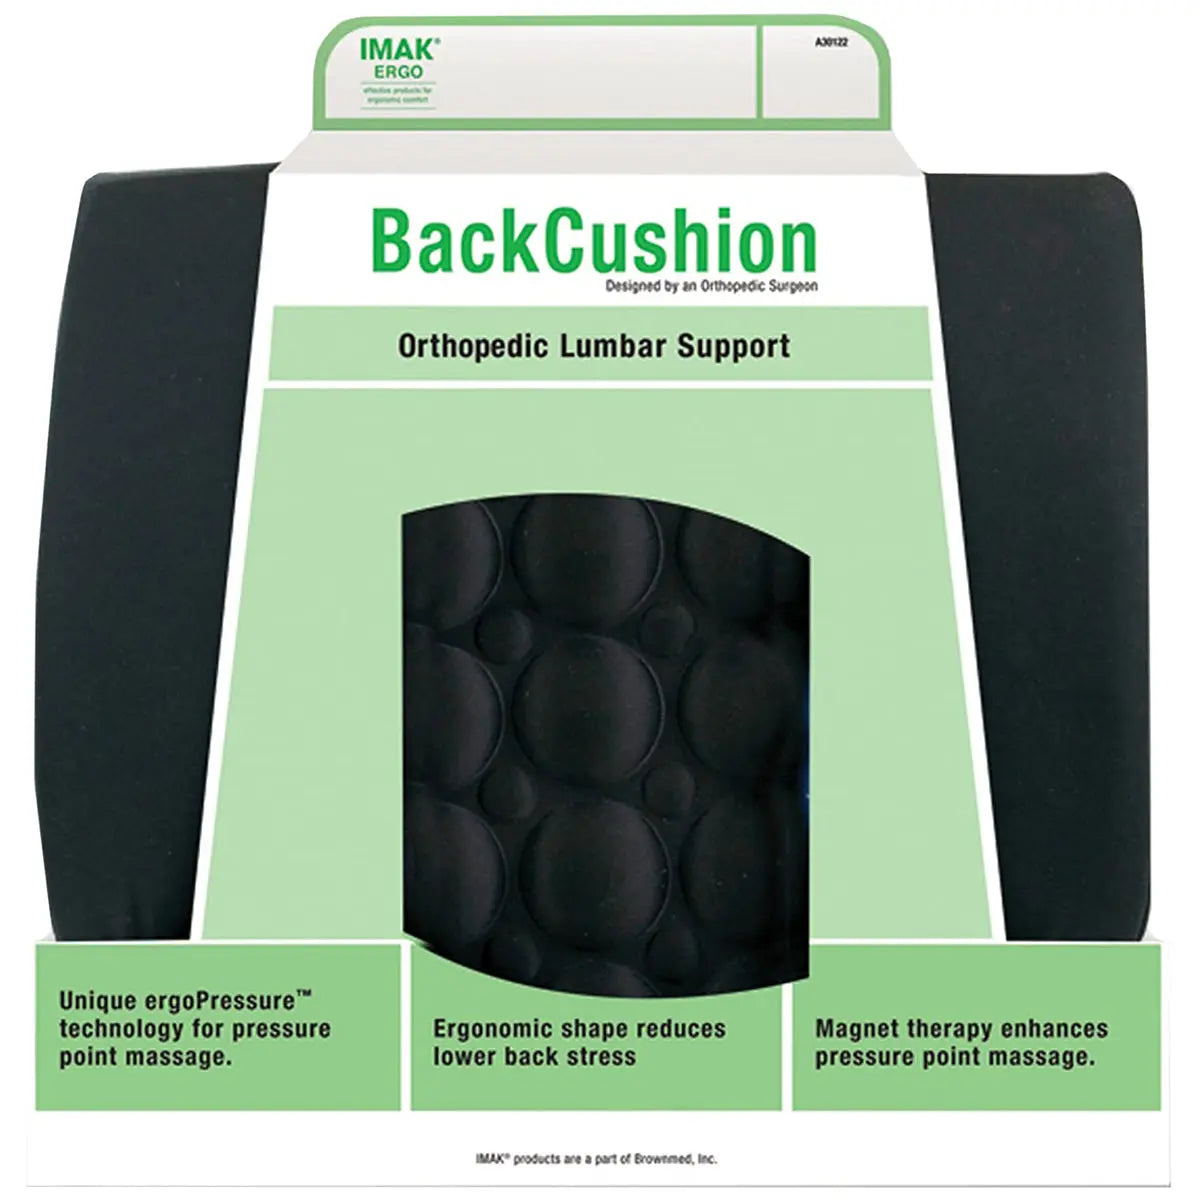 Brownmed IMAK Ergo Back Cushion and Lumbar Support - Black IMAK